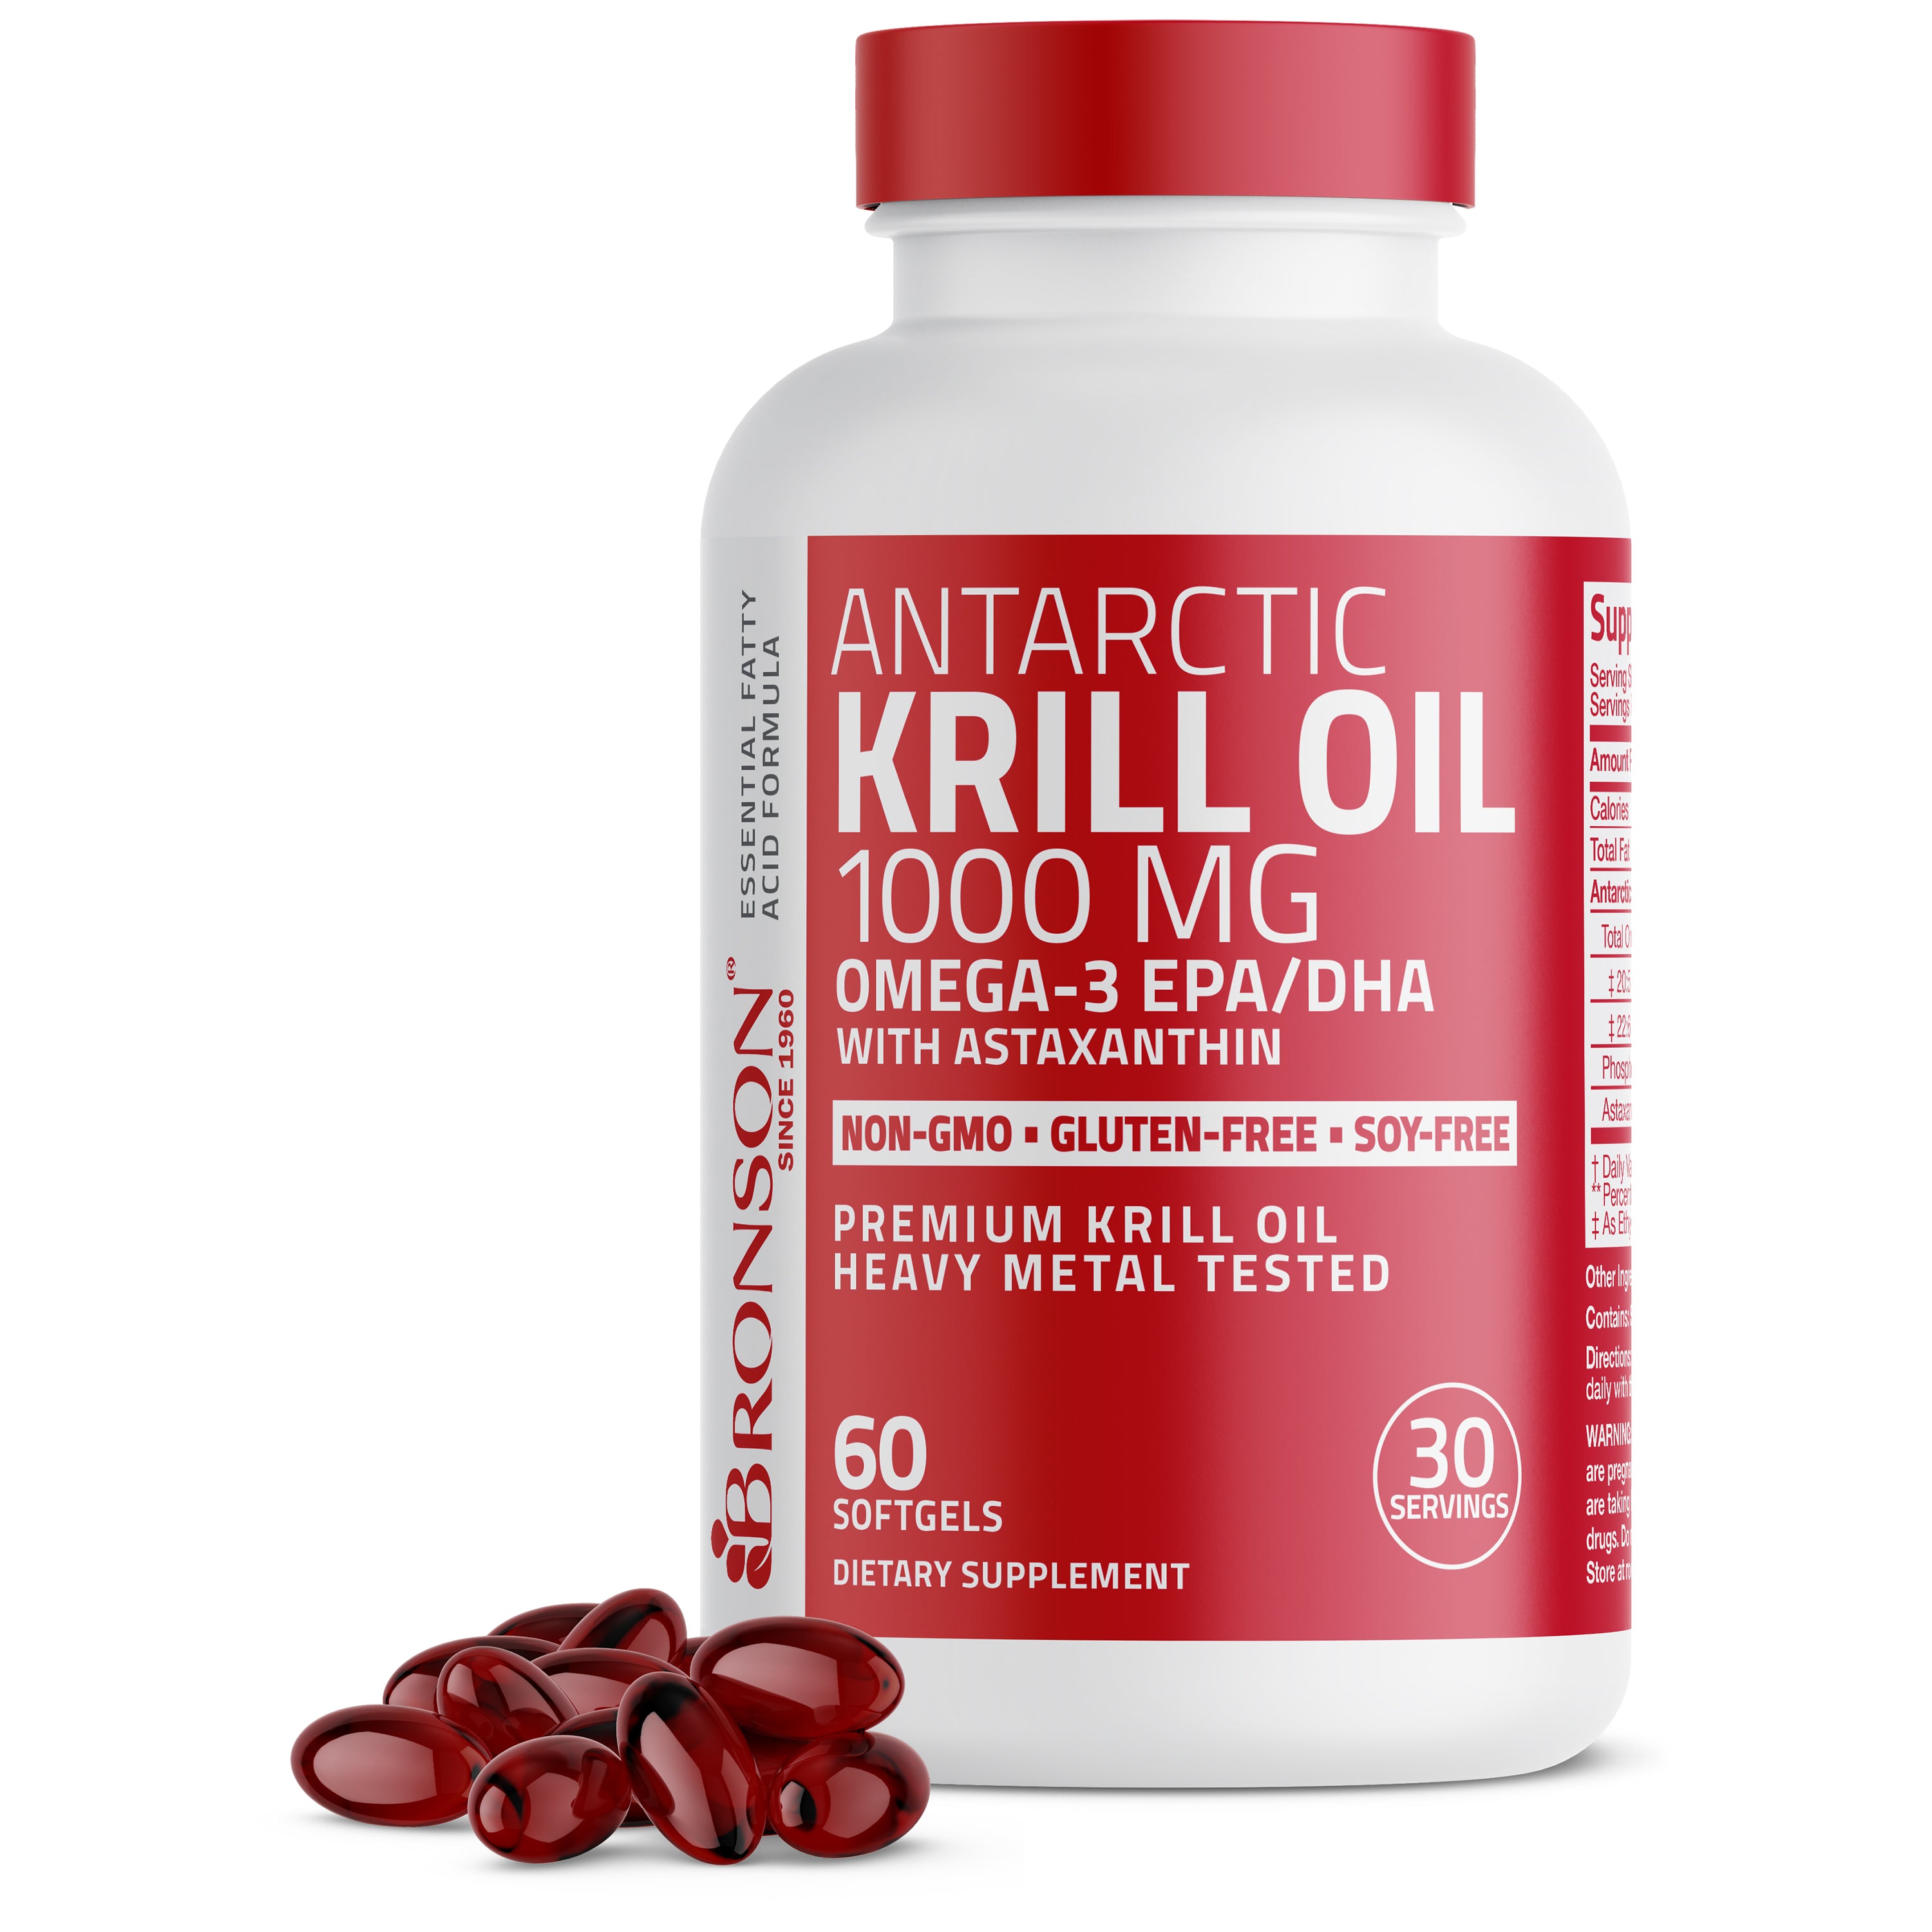 Premium Antarctic Krill Oil Omega-3 EPA DHA Non-GMO - 1,000 mg